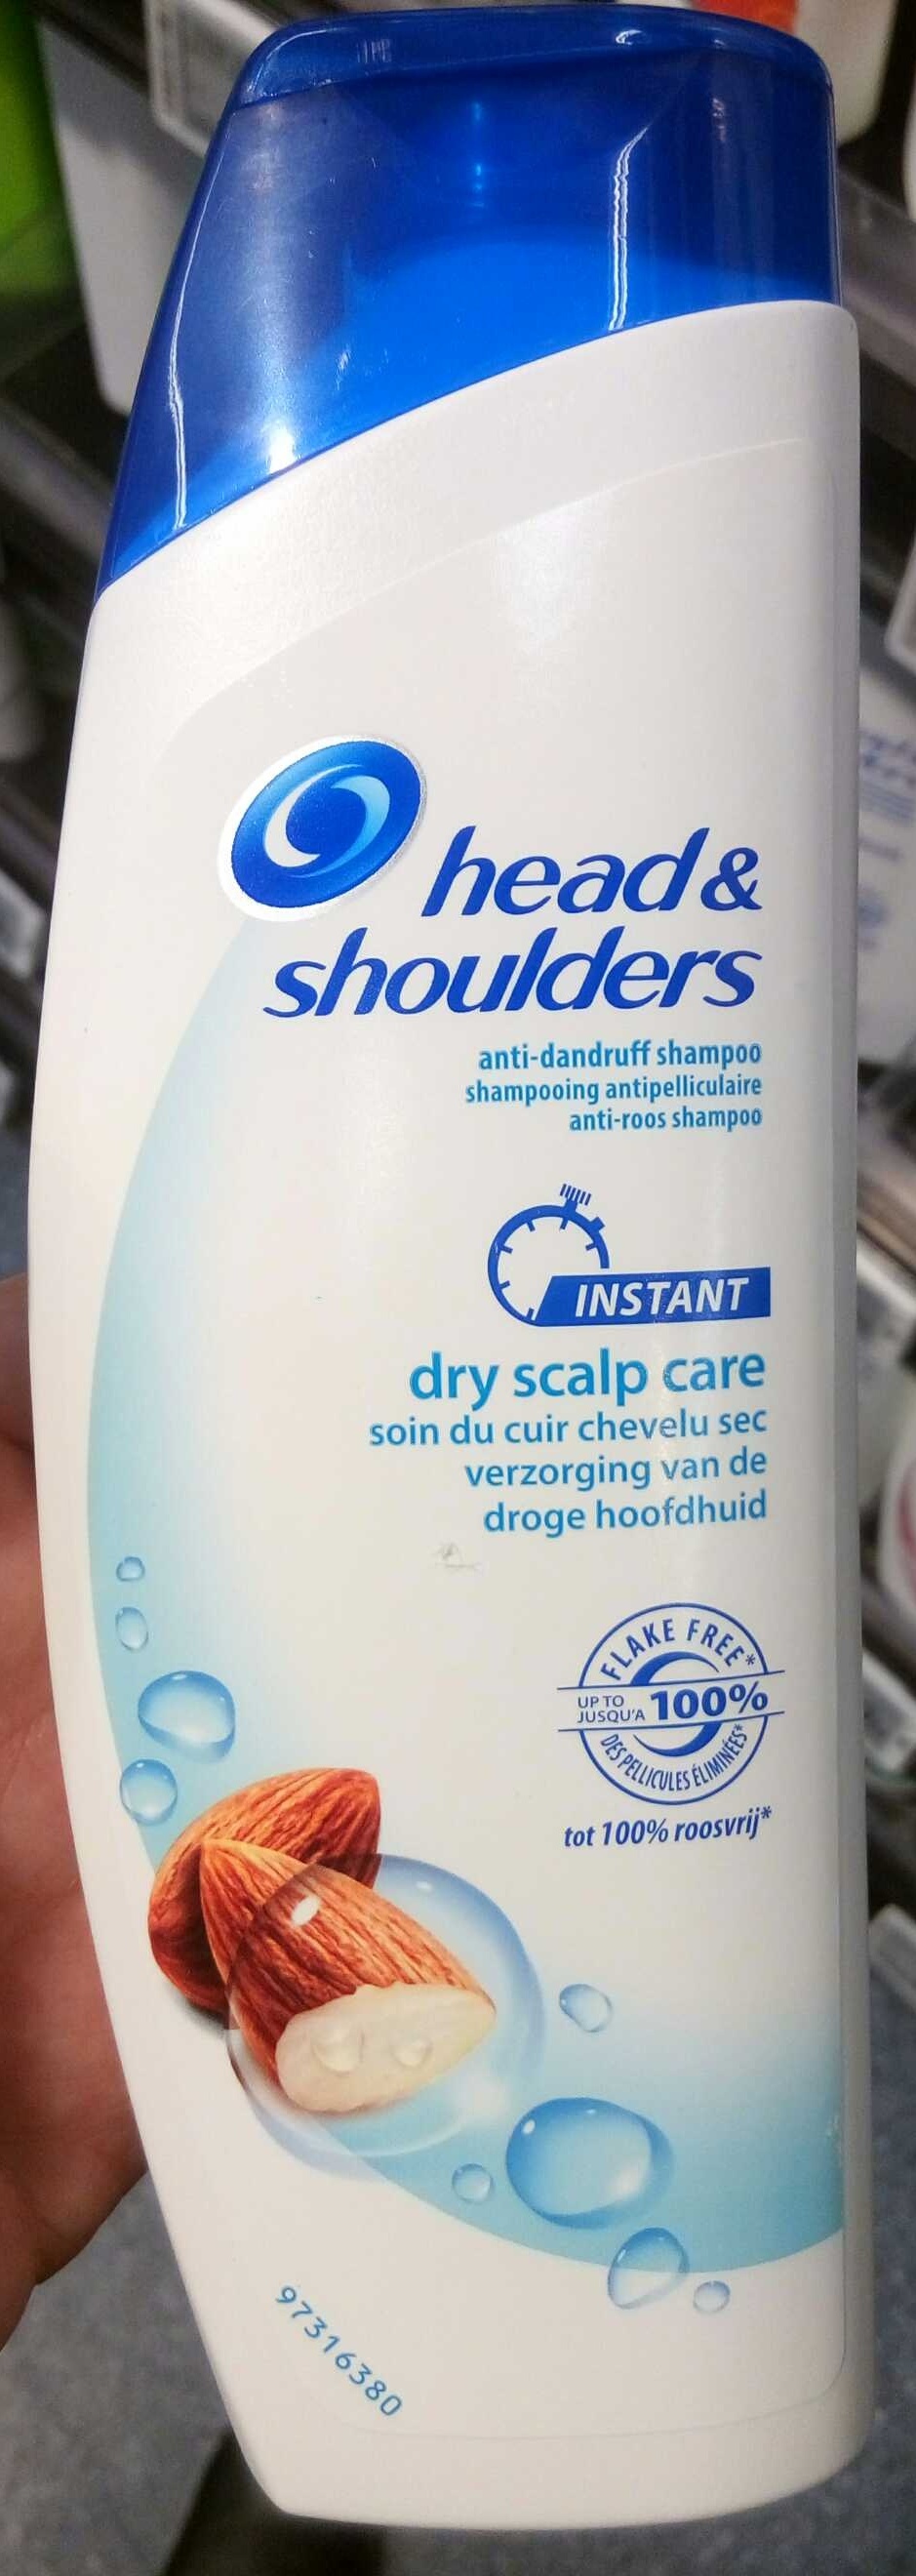 Shampooing antipelliculaire Instant Dry Scalp Care - Produit - fr